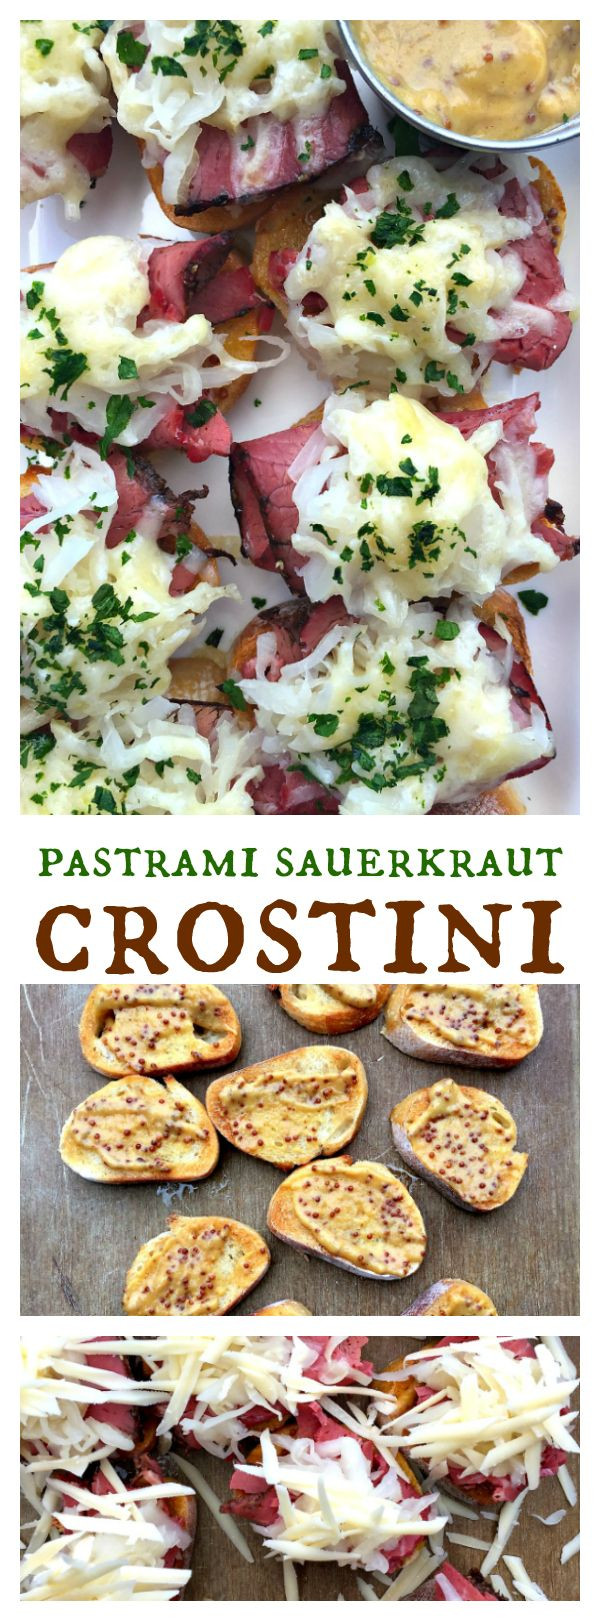 St Patrick's Day Appetizers Food Network
 Pastrami Sauerkraut Crostini for St Patrick s Day